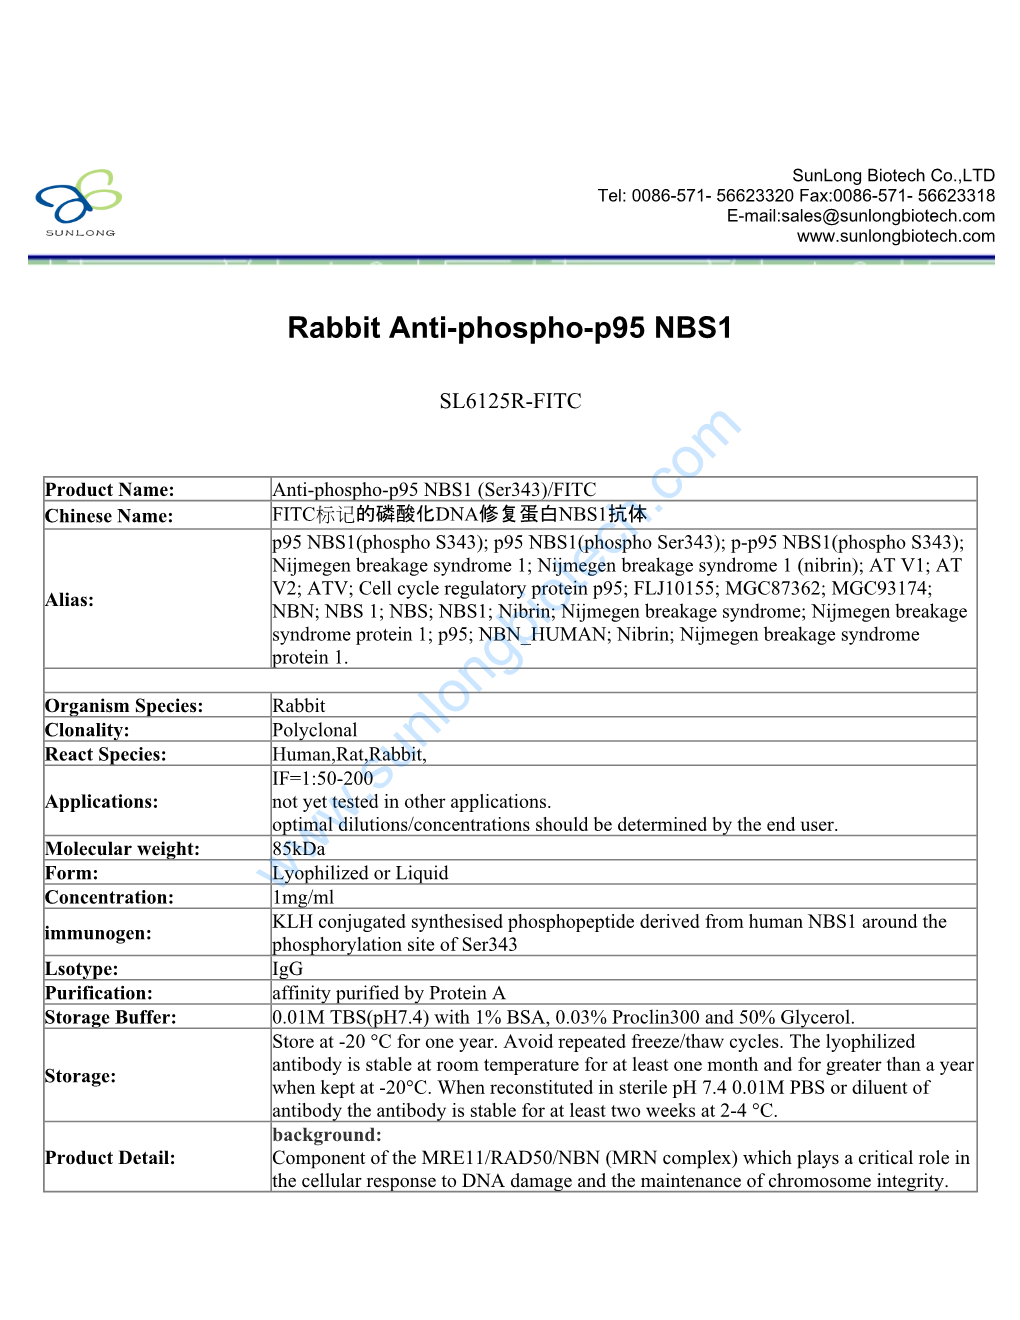 Rabbit Anti-Phospho-P95 NBS1-SL6125R-FITC